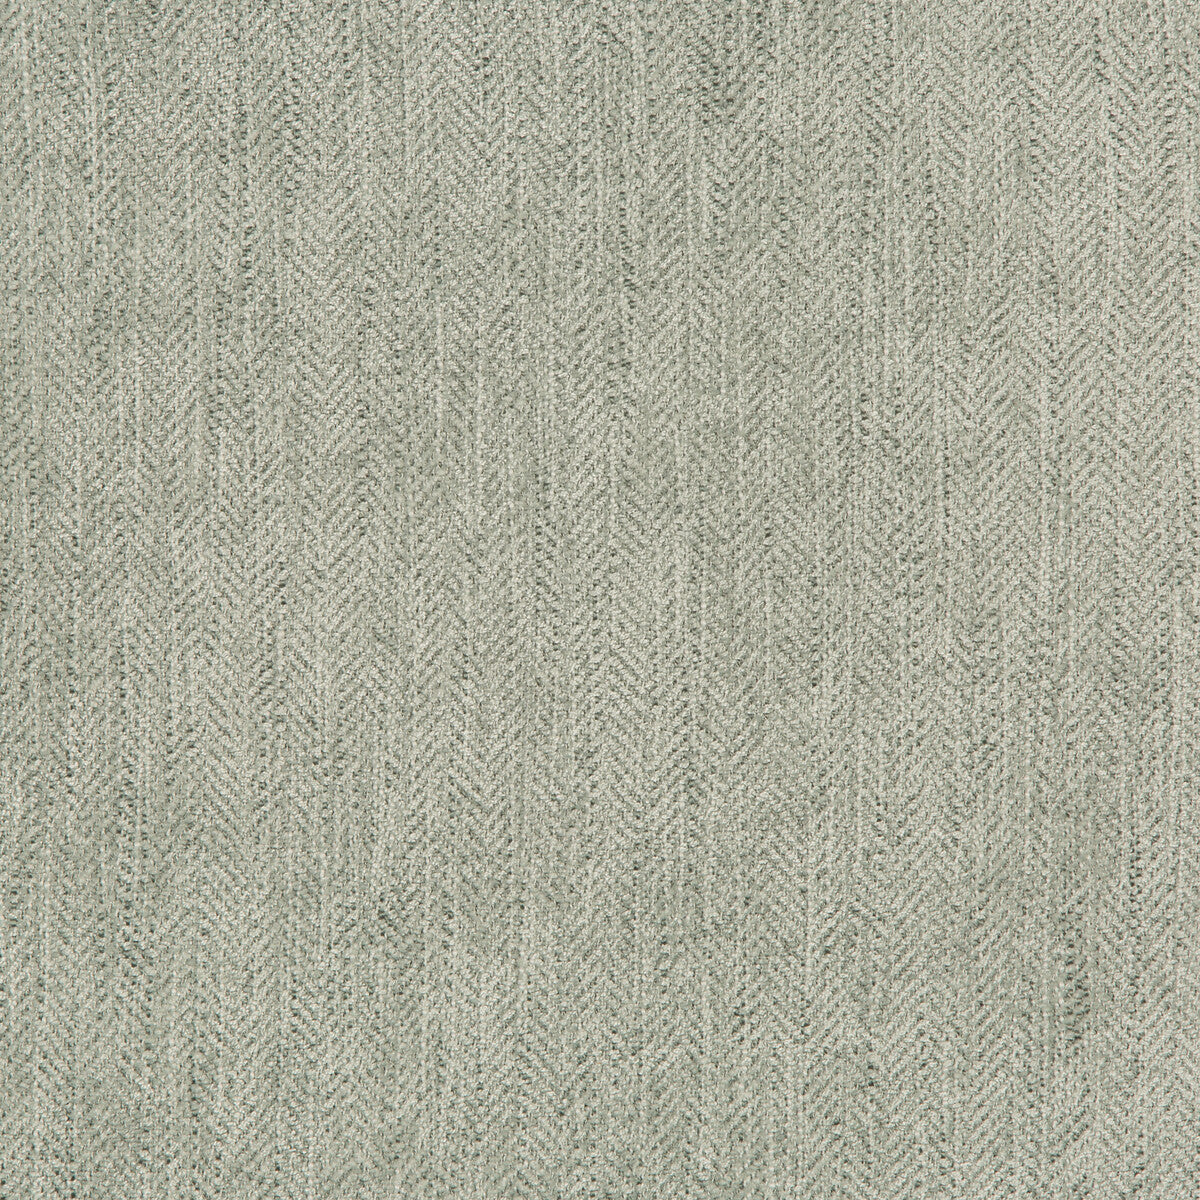 Kravet Smart fabric in 35933-23 color - pattern 35933.23.0 - by Kravet Smart in the Performance Kravetarmor collection